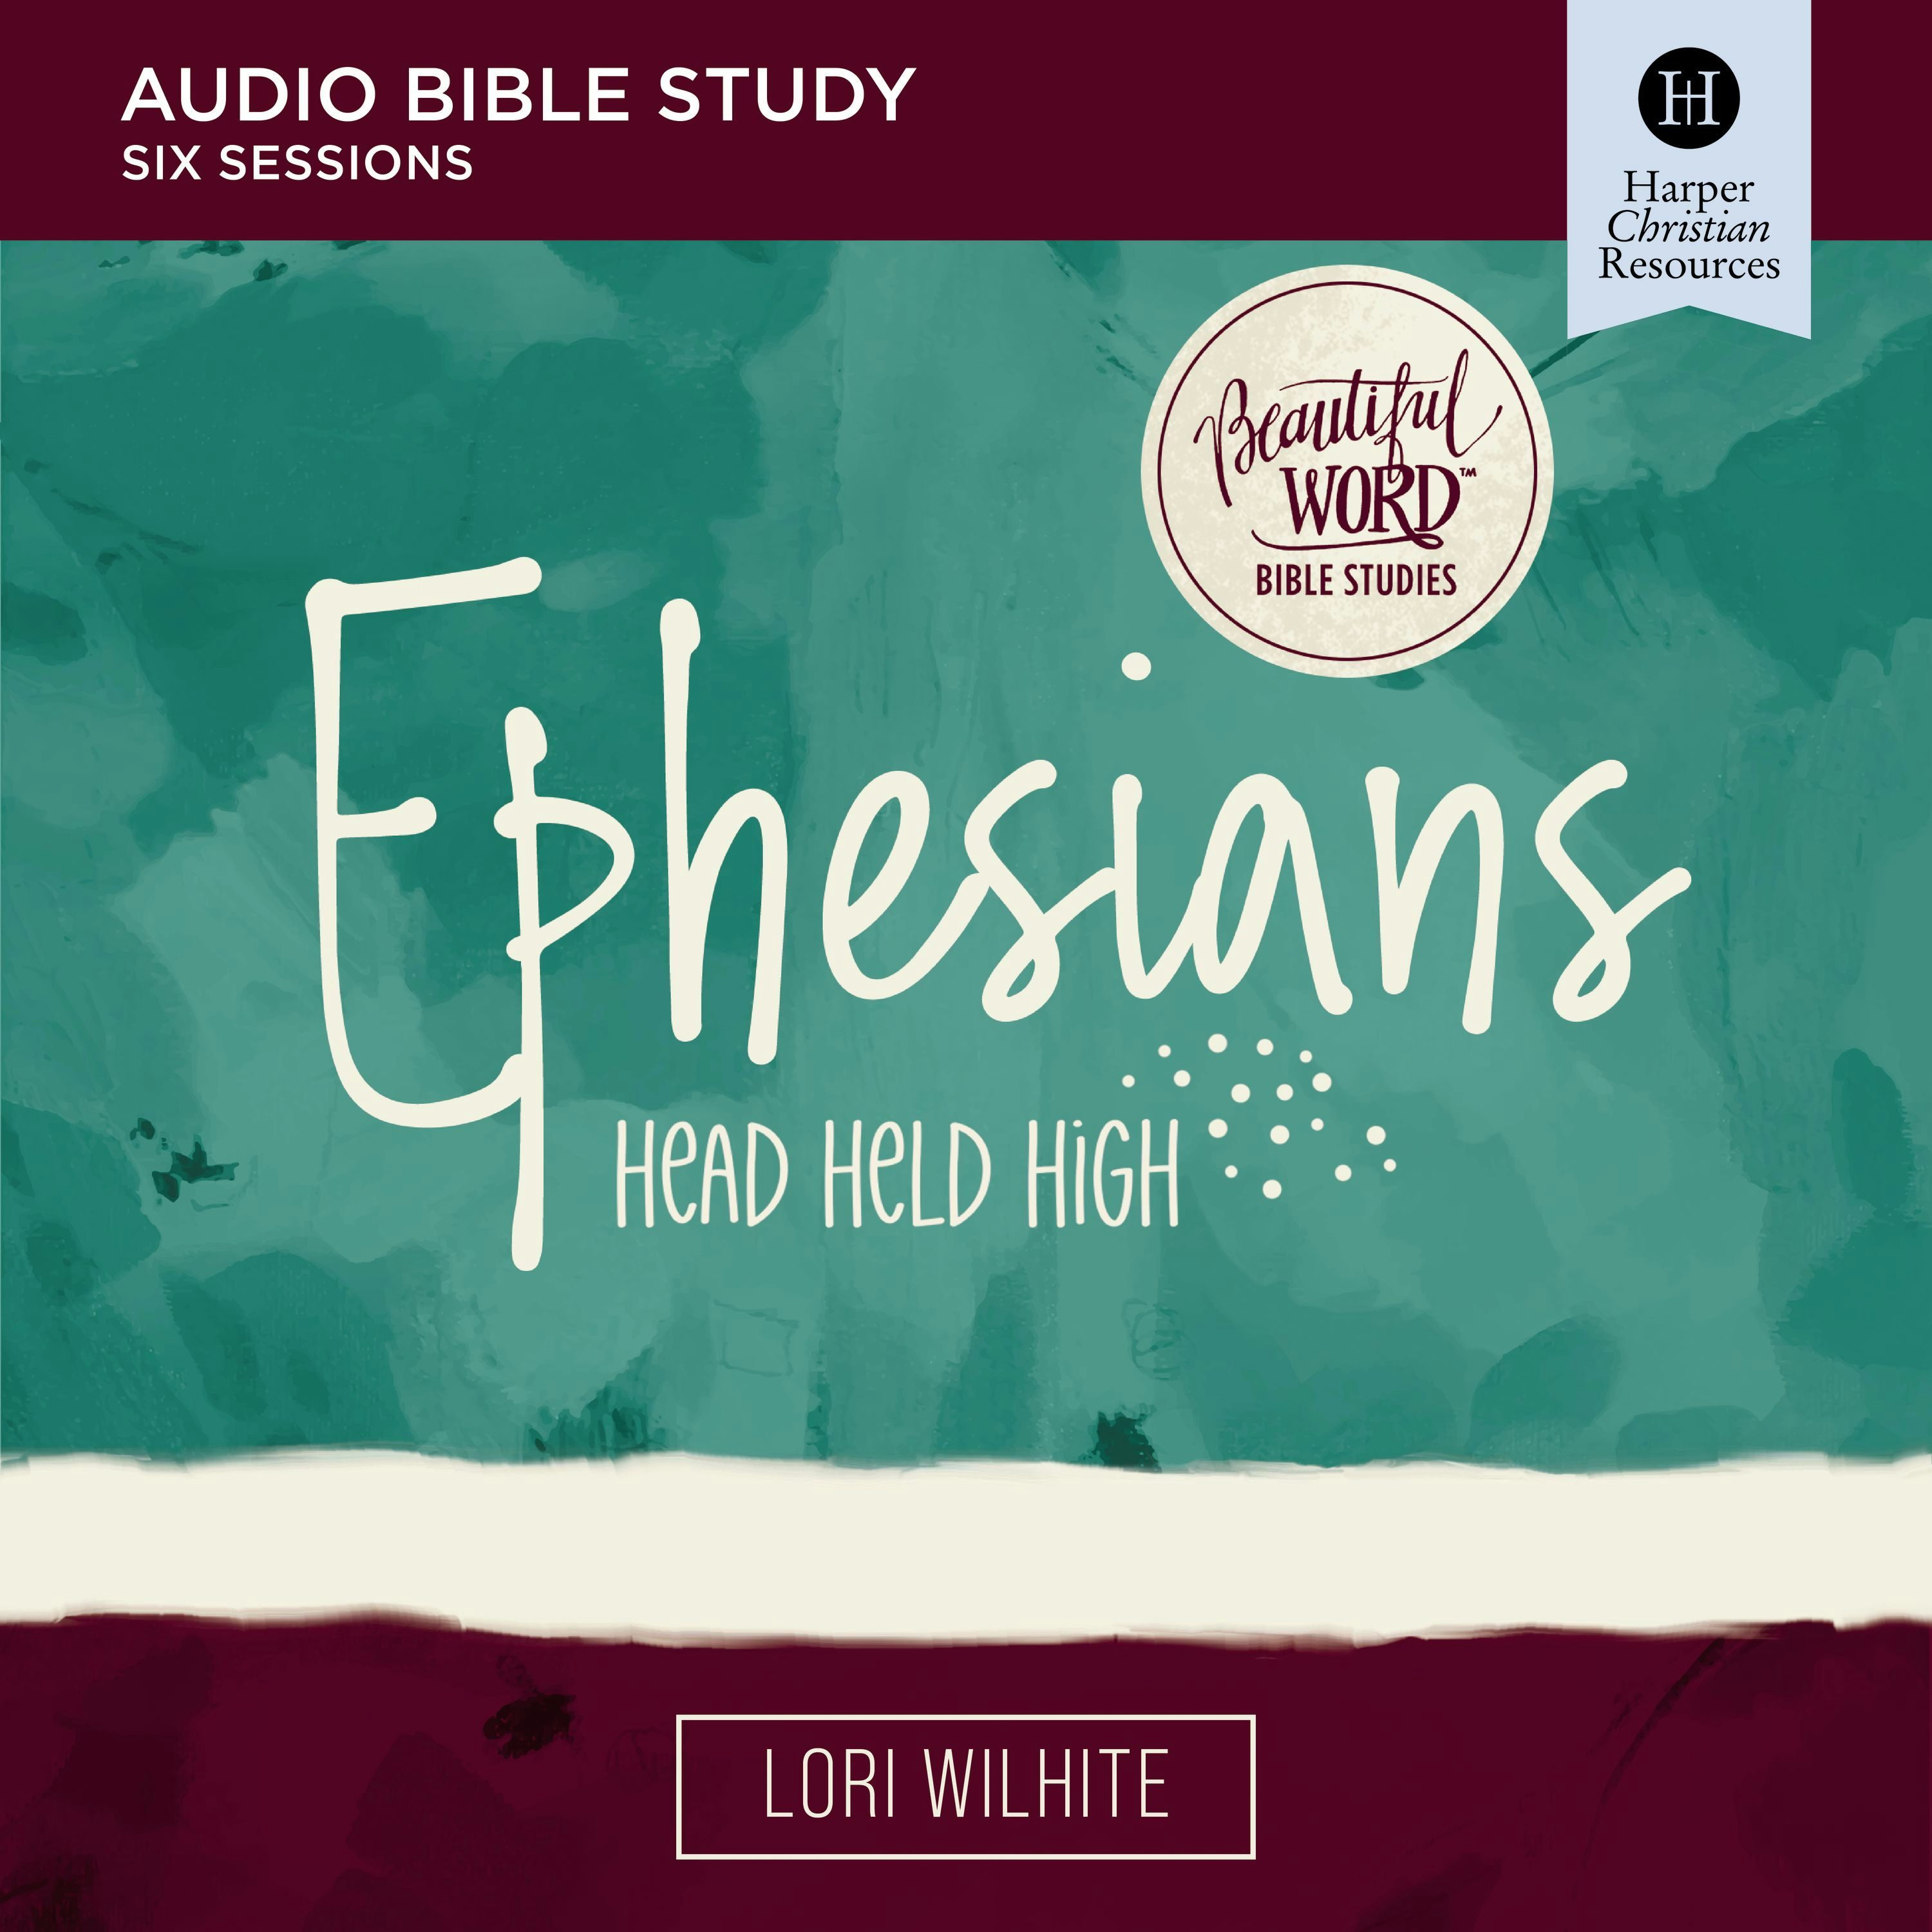 awmi ephesians bible study